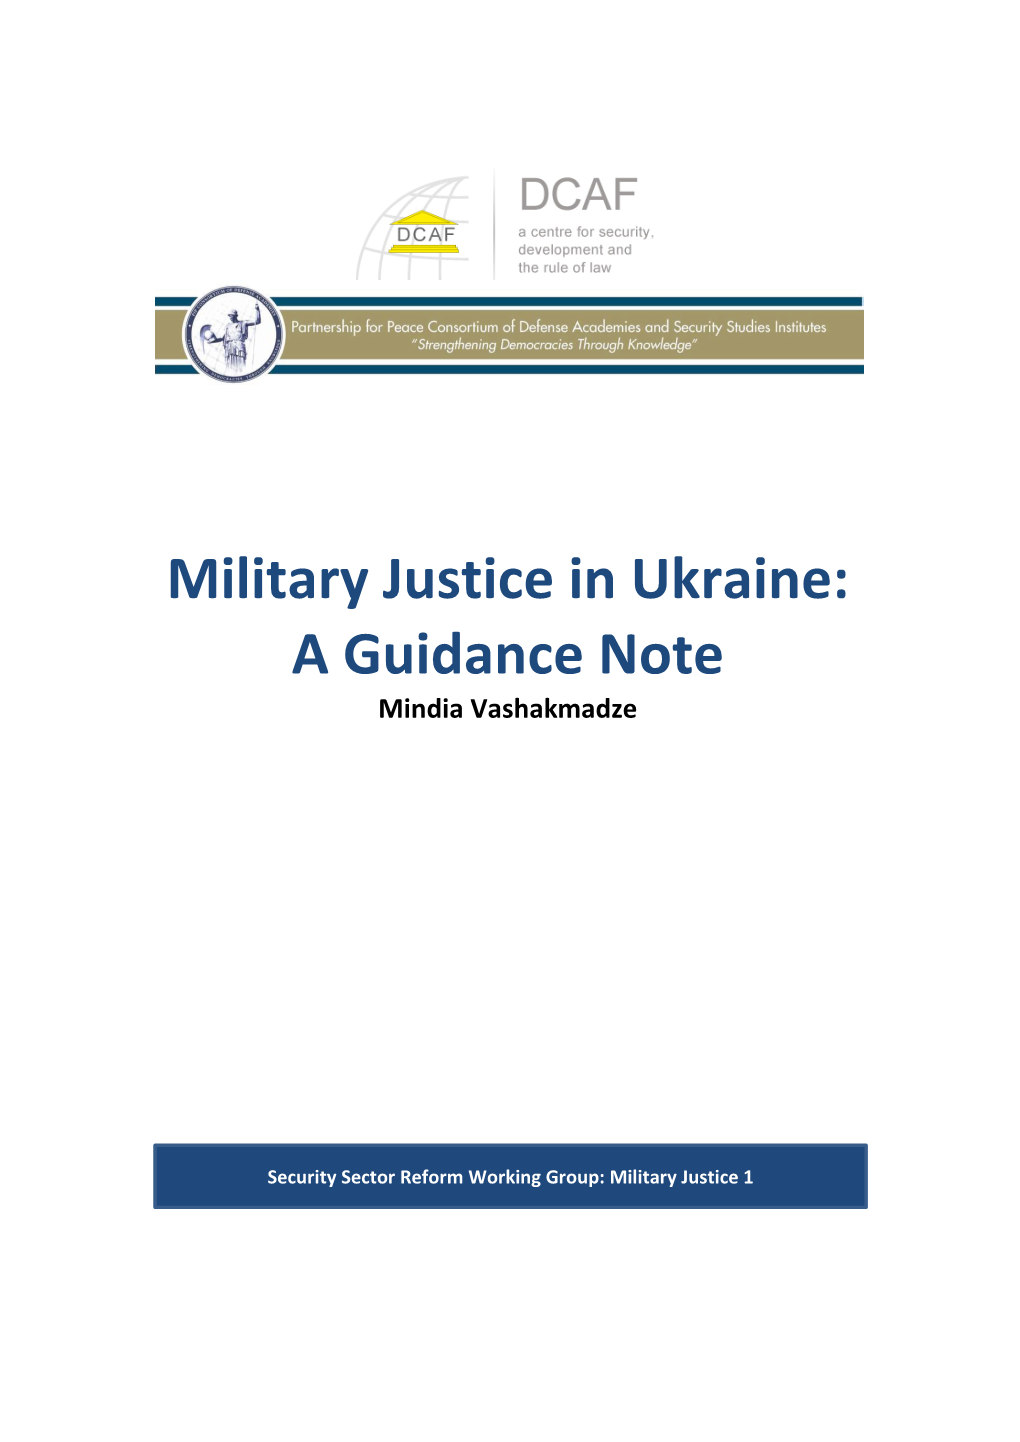 Military Justice in Ukraine: a Guidance Note Mindia Vashakmadze